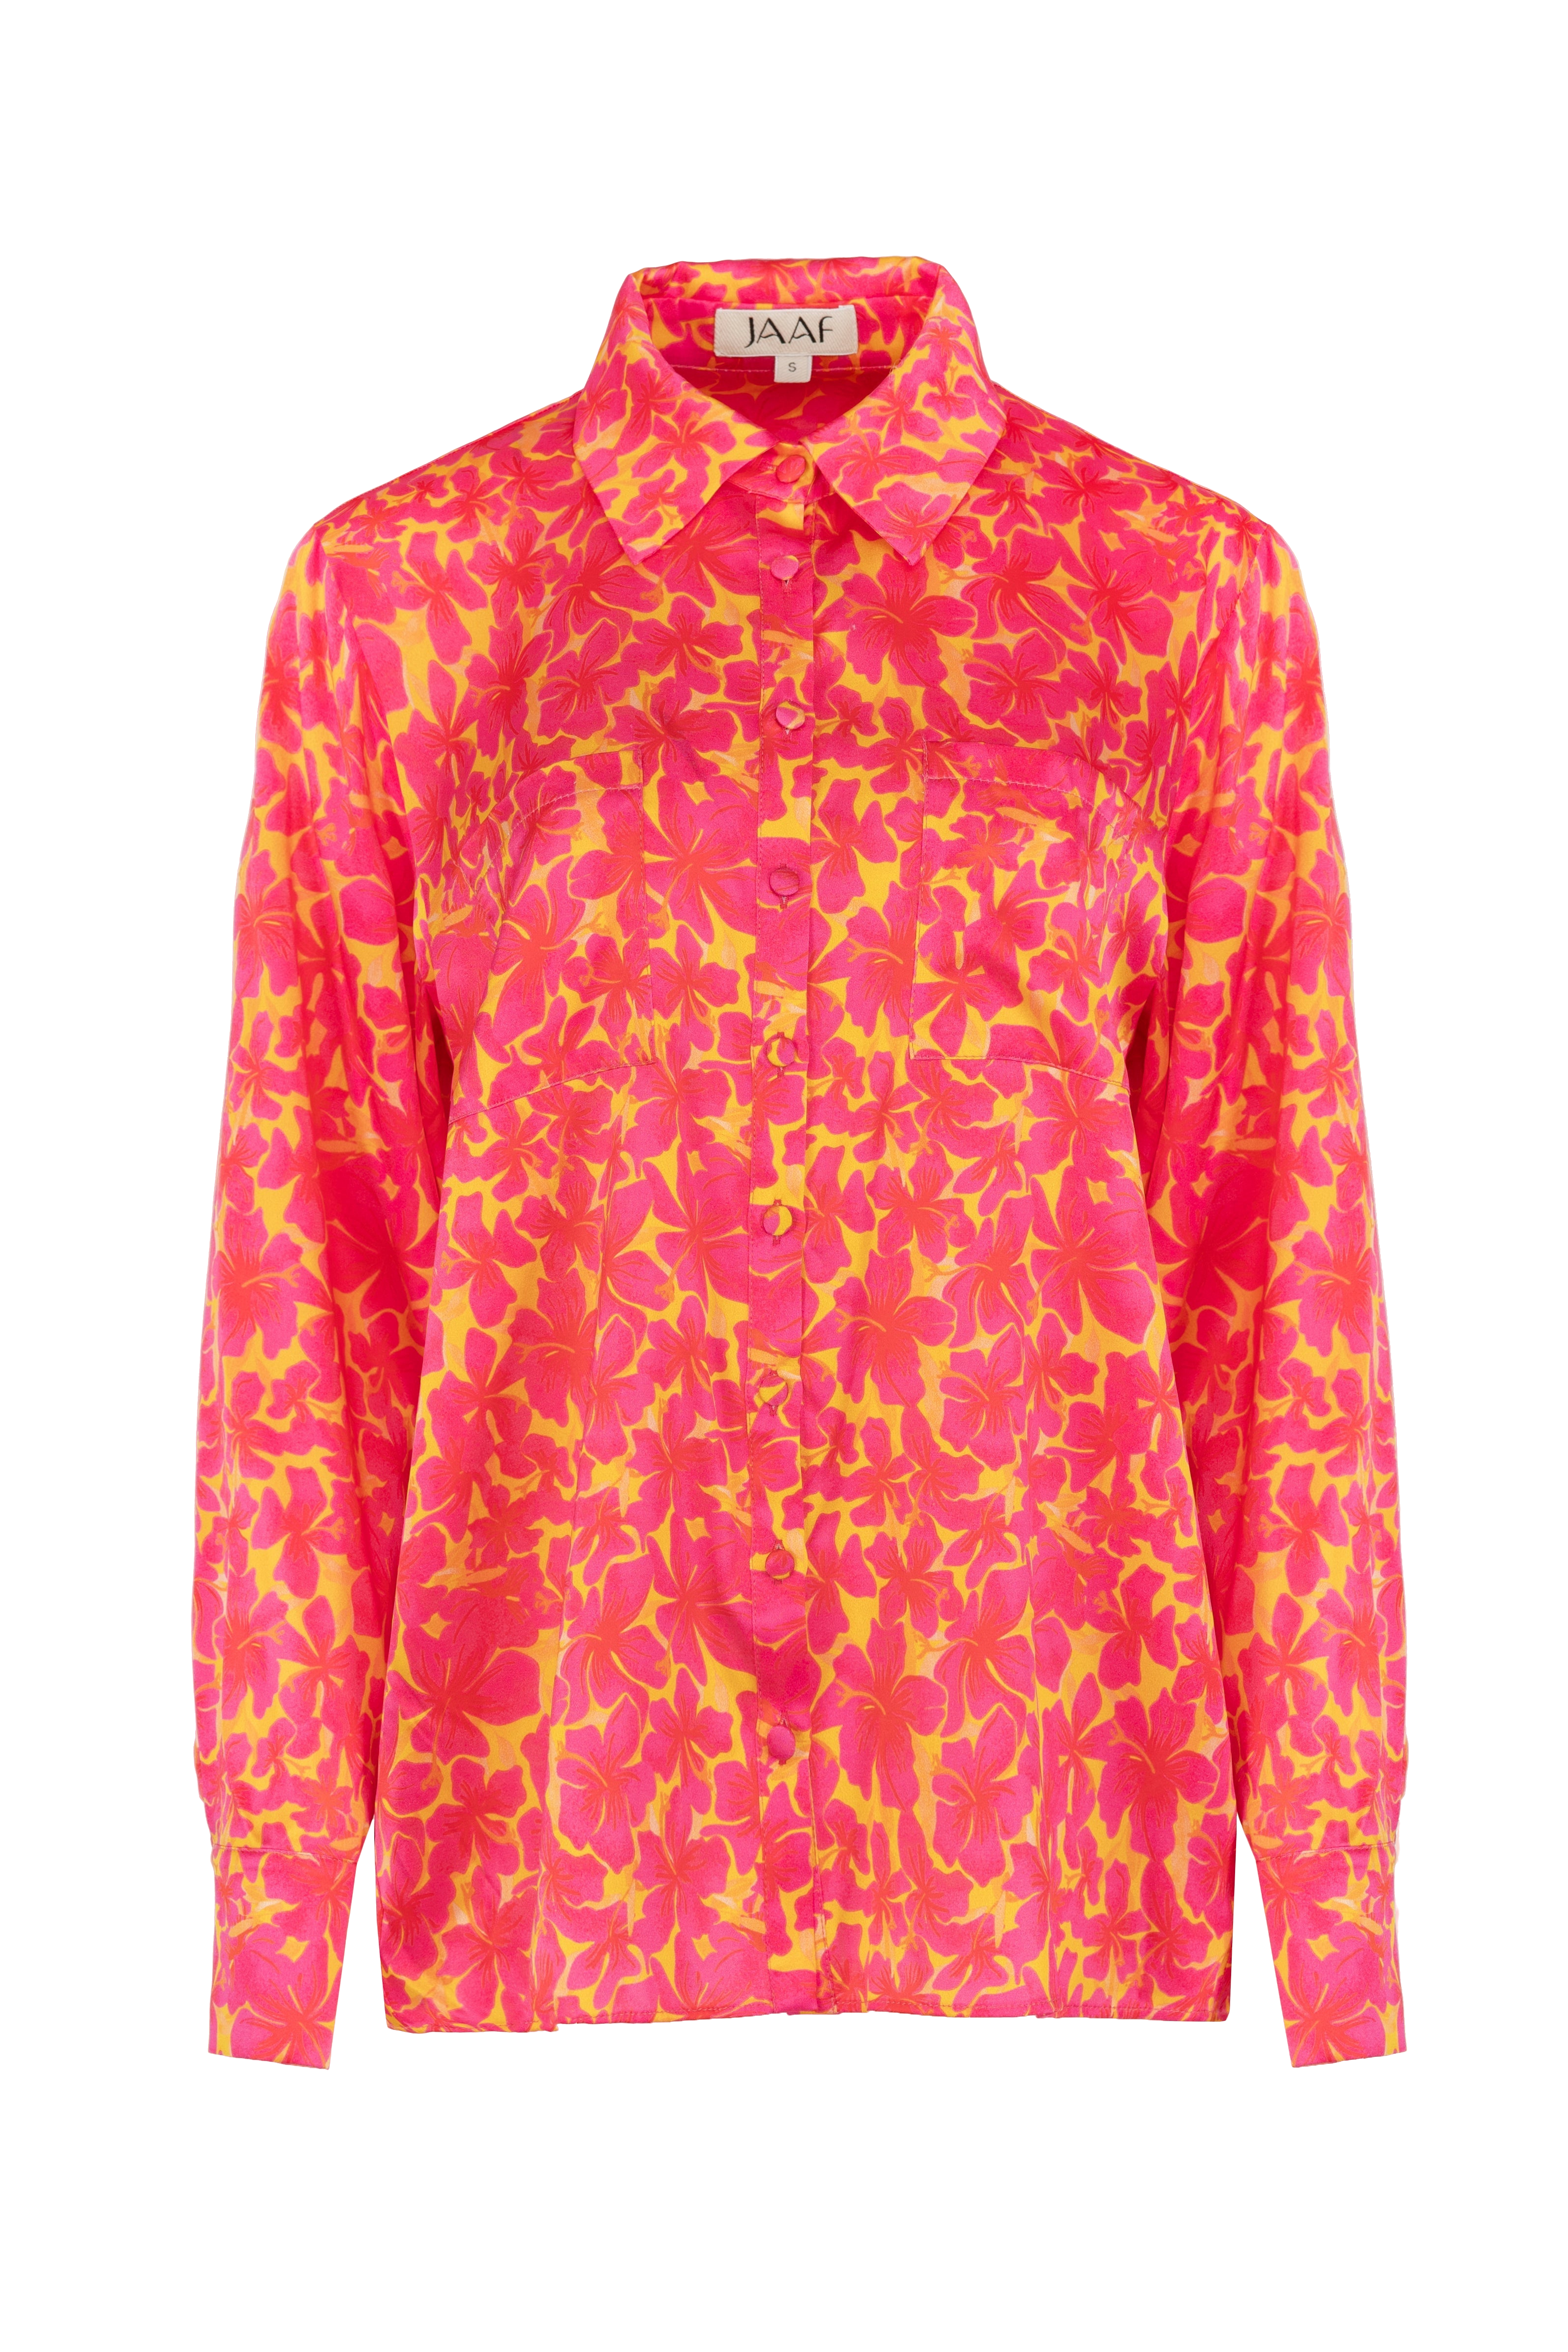 Jaaf Oversized Silk Shirt In Hibiscus Print In Pink/purple/red